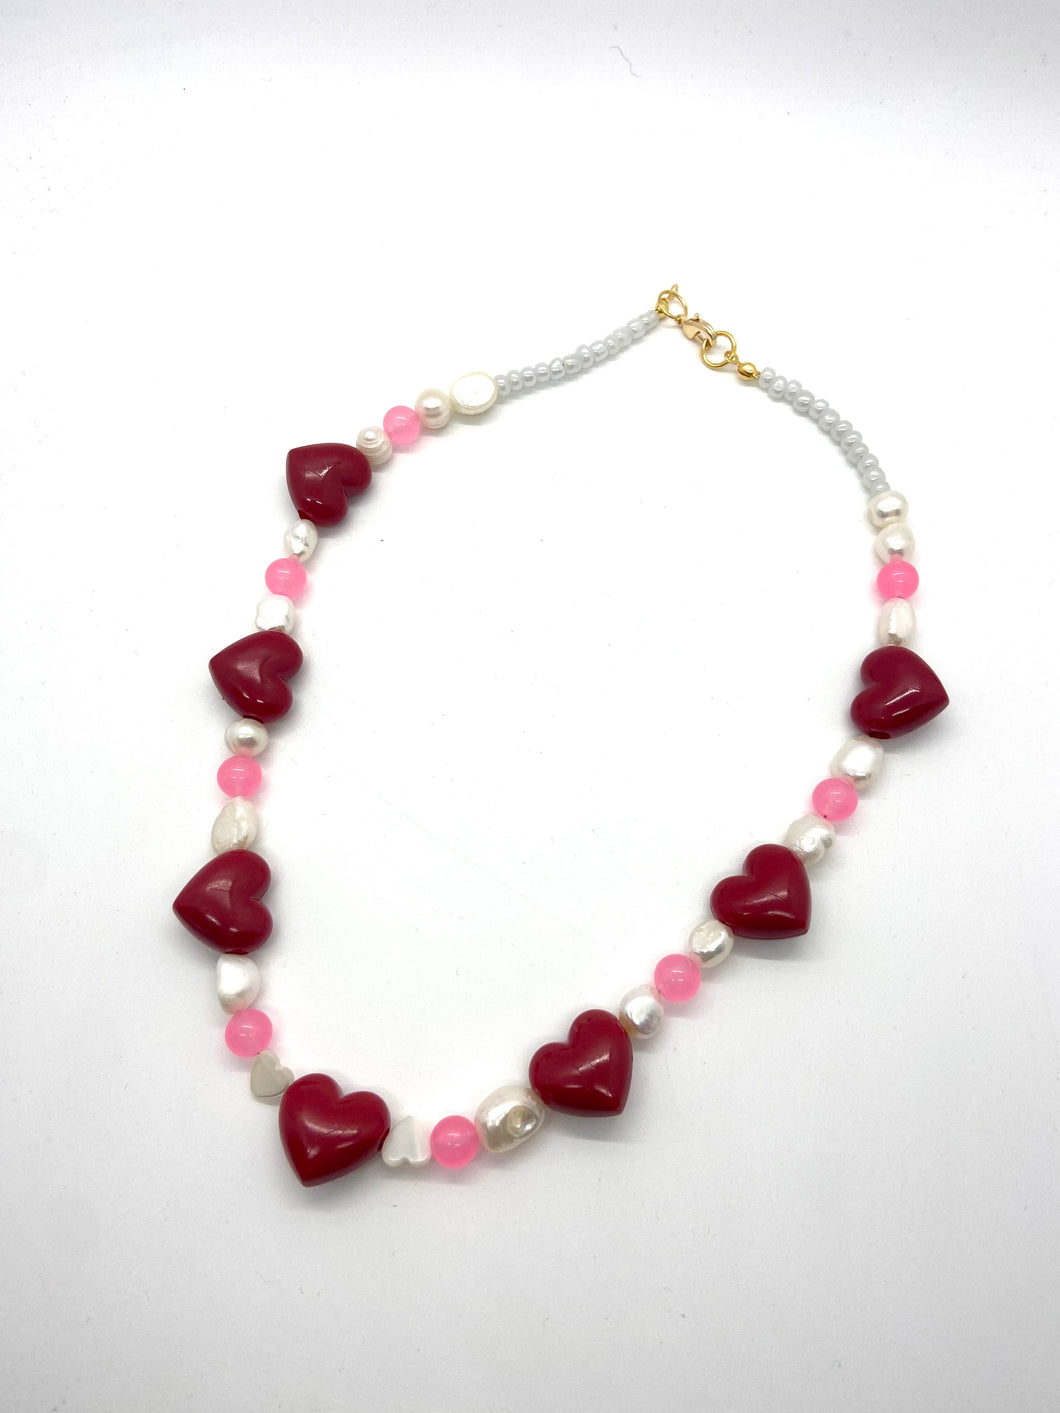 Valentines necklace